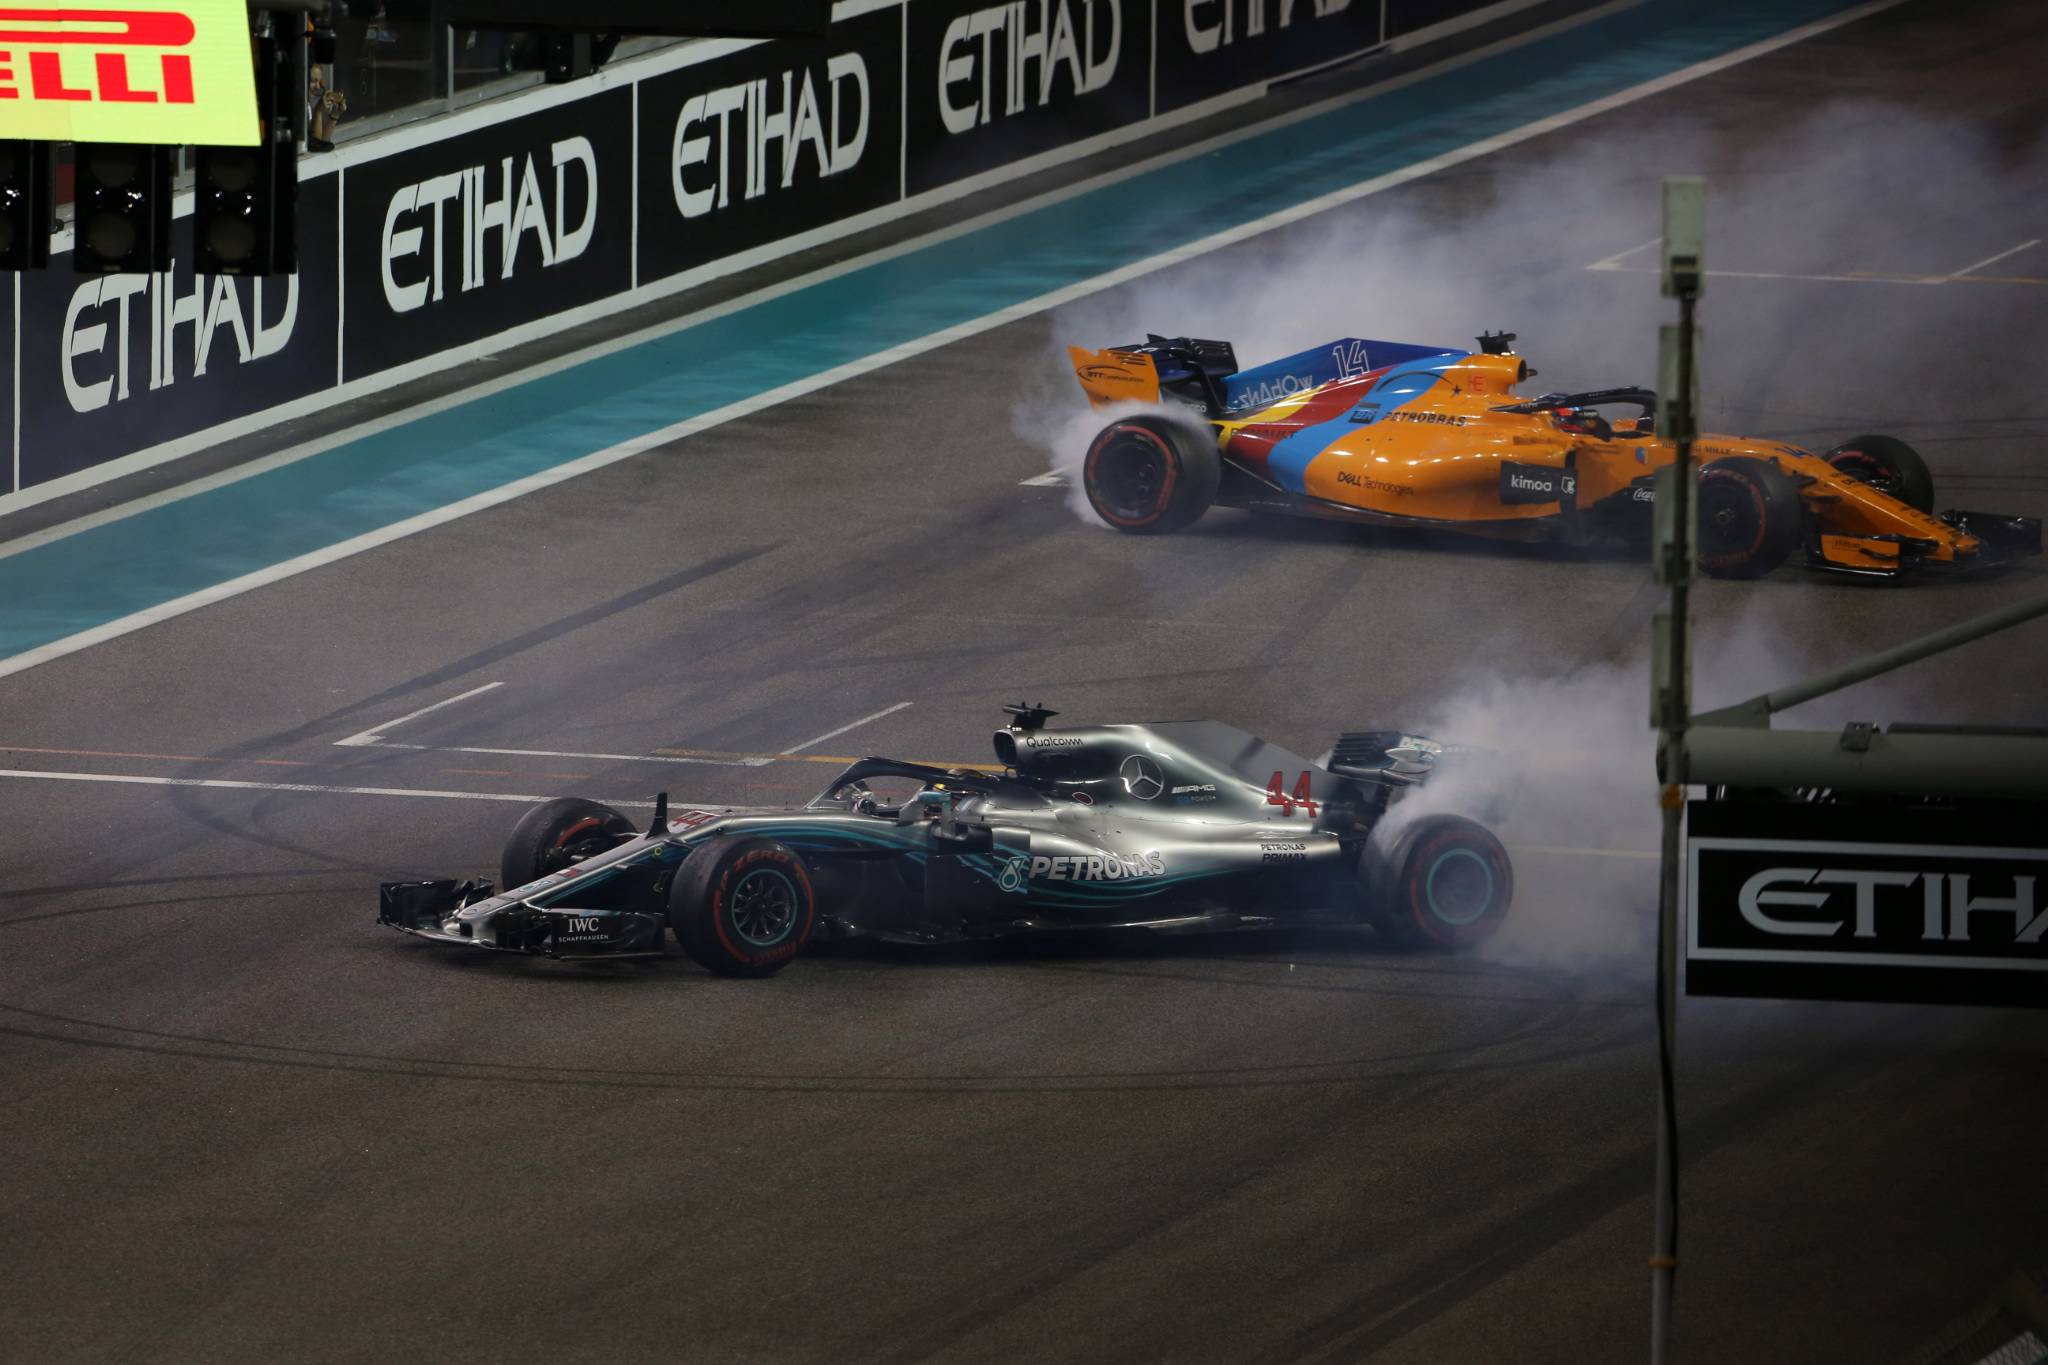 25.11.2018 - Race, Lewis Hamilton (GBR) Mercedes AMG F1 W09 and Fernando Alonso (ESP) McLaren MCL33